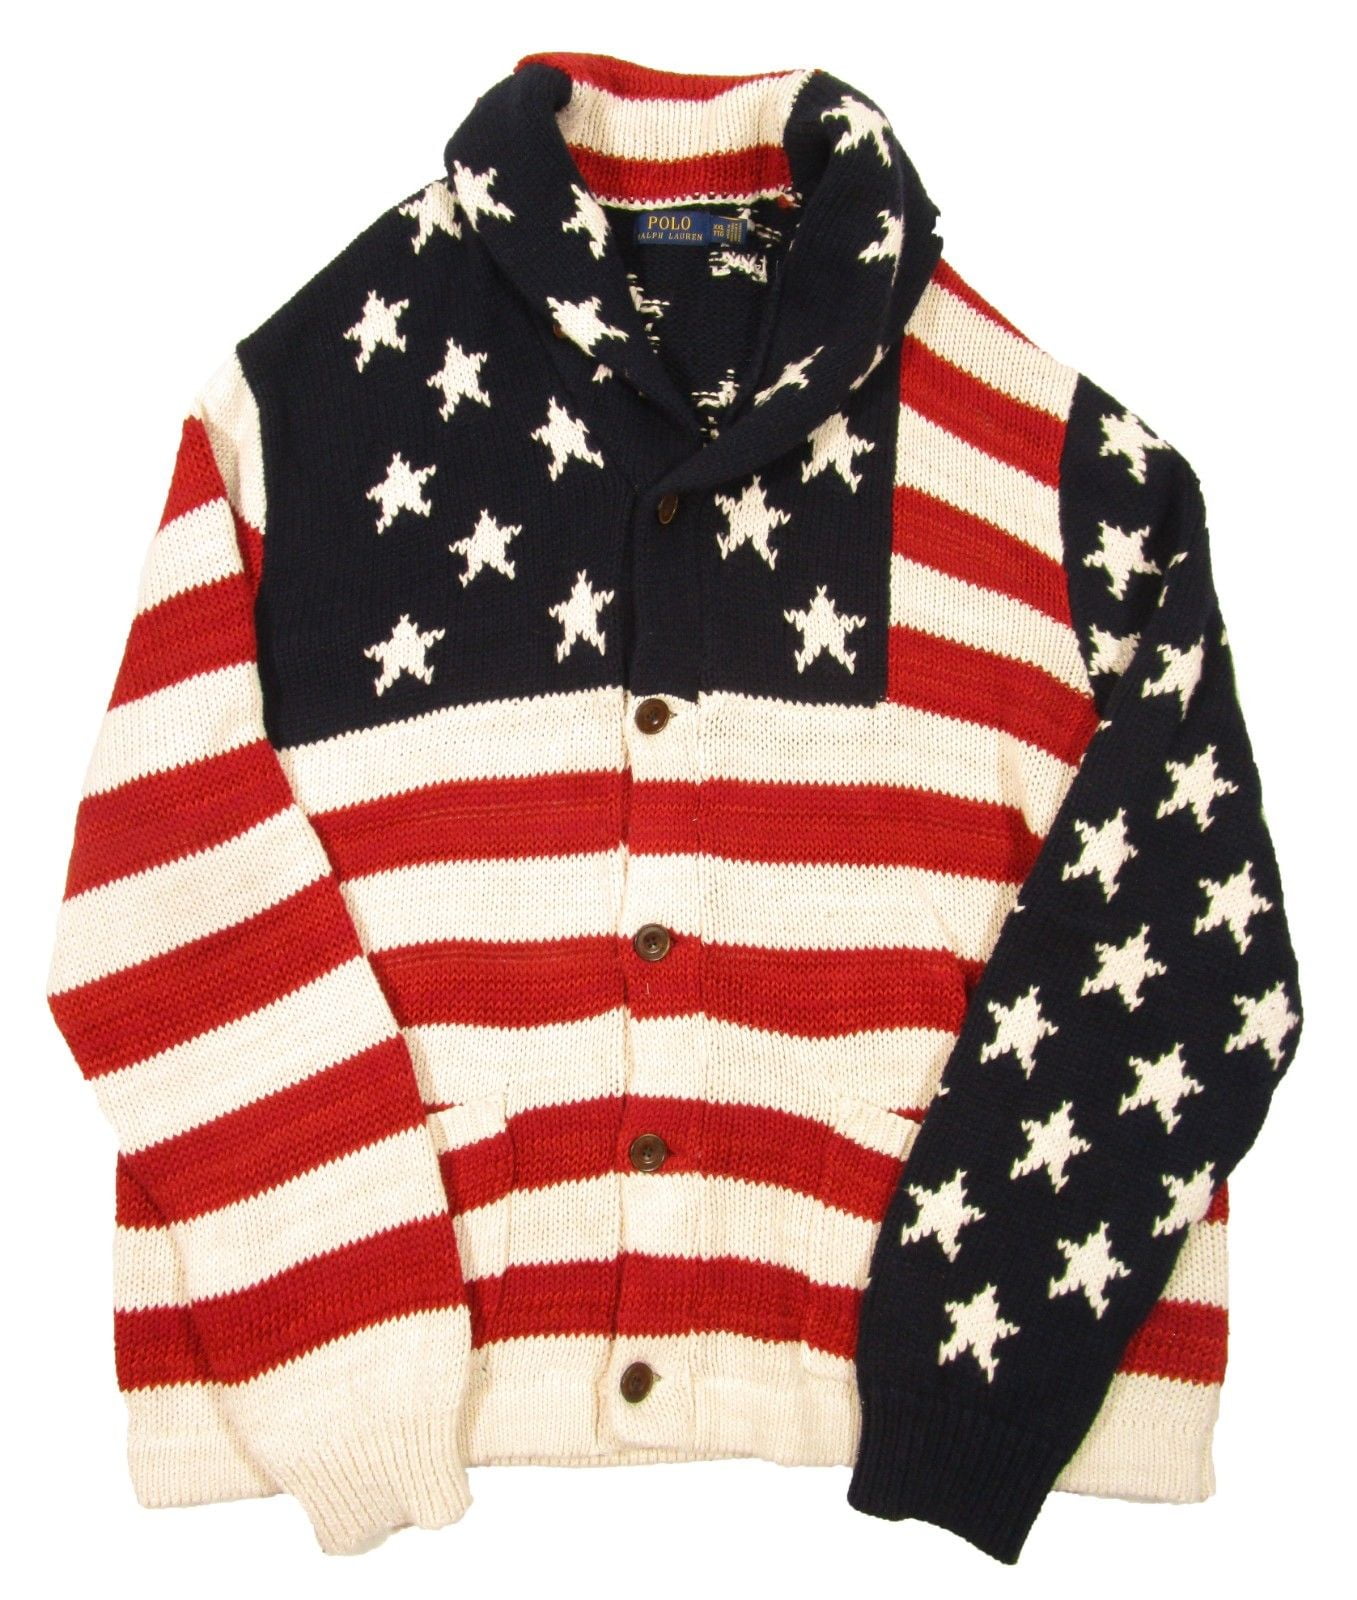 ralph lauren american flag sweater mens